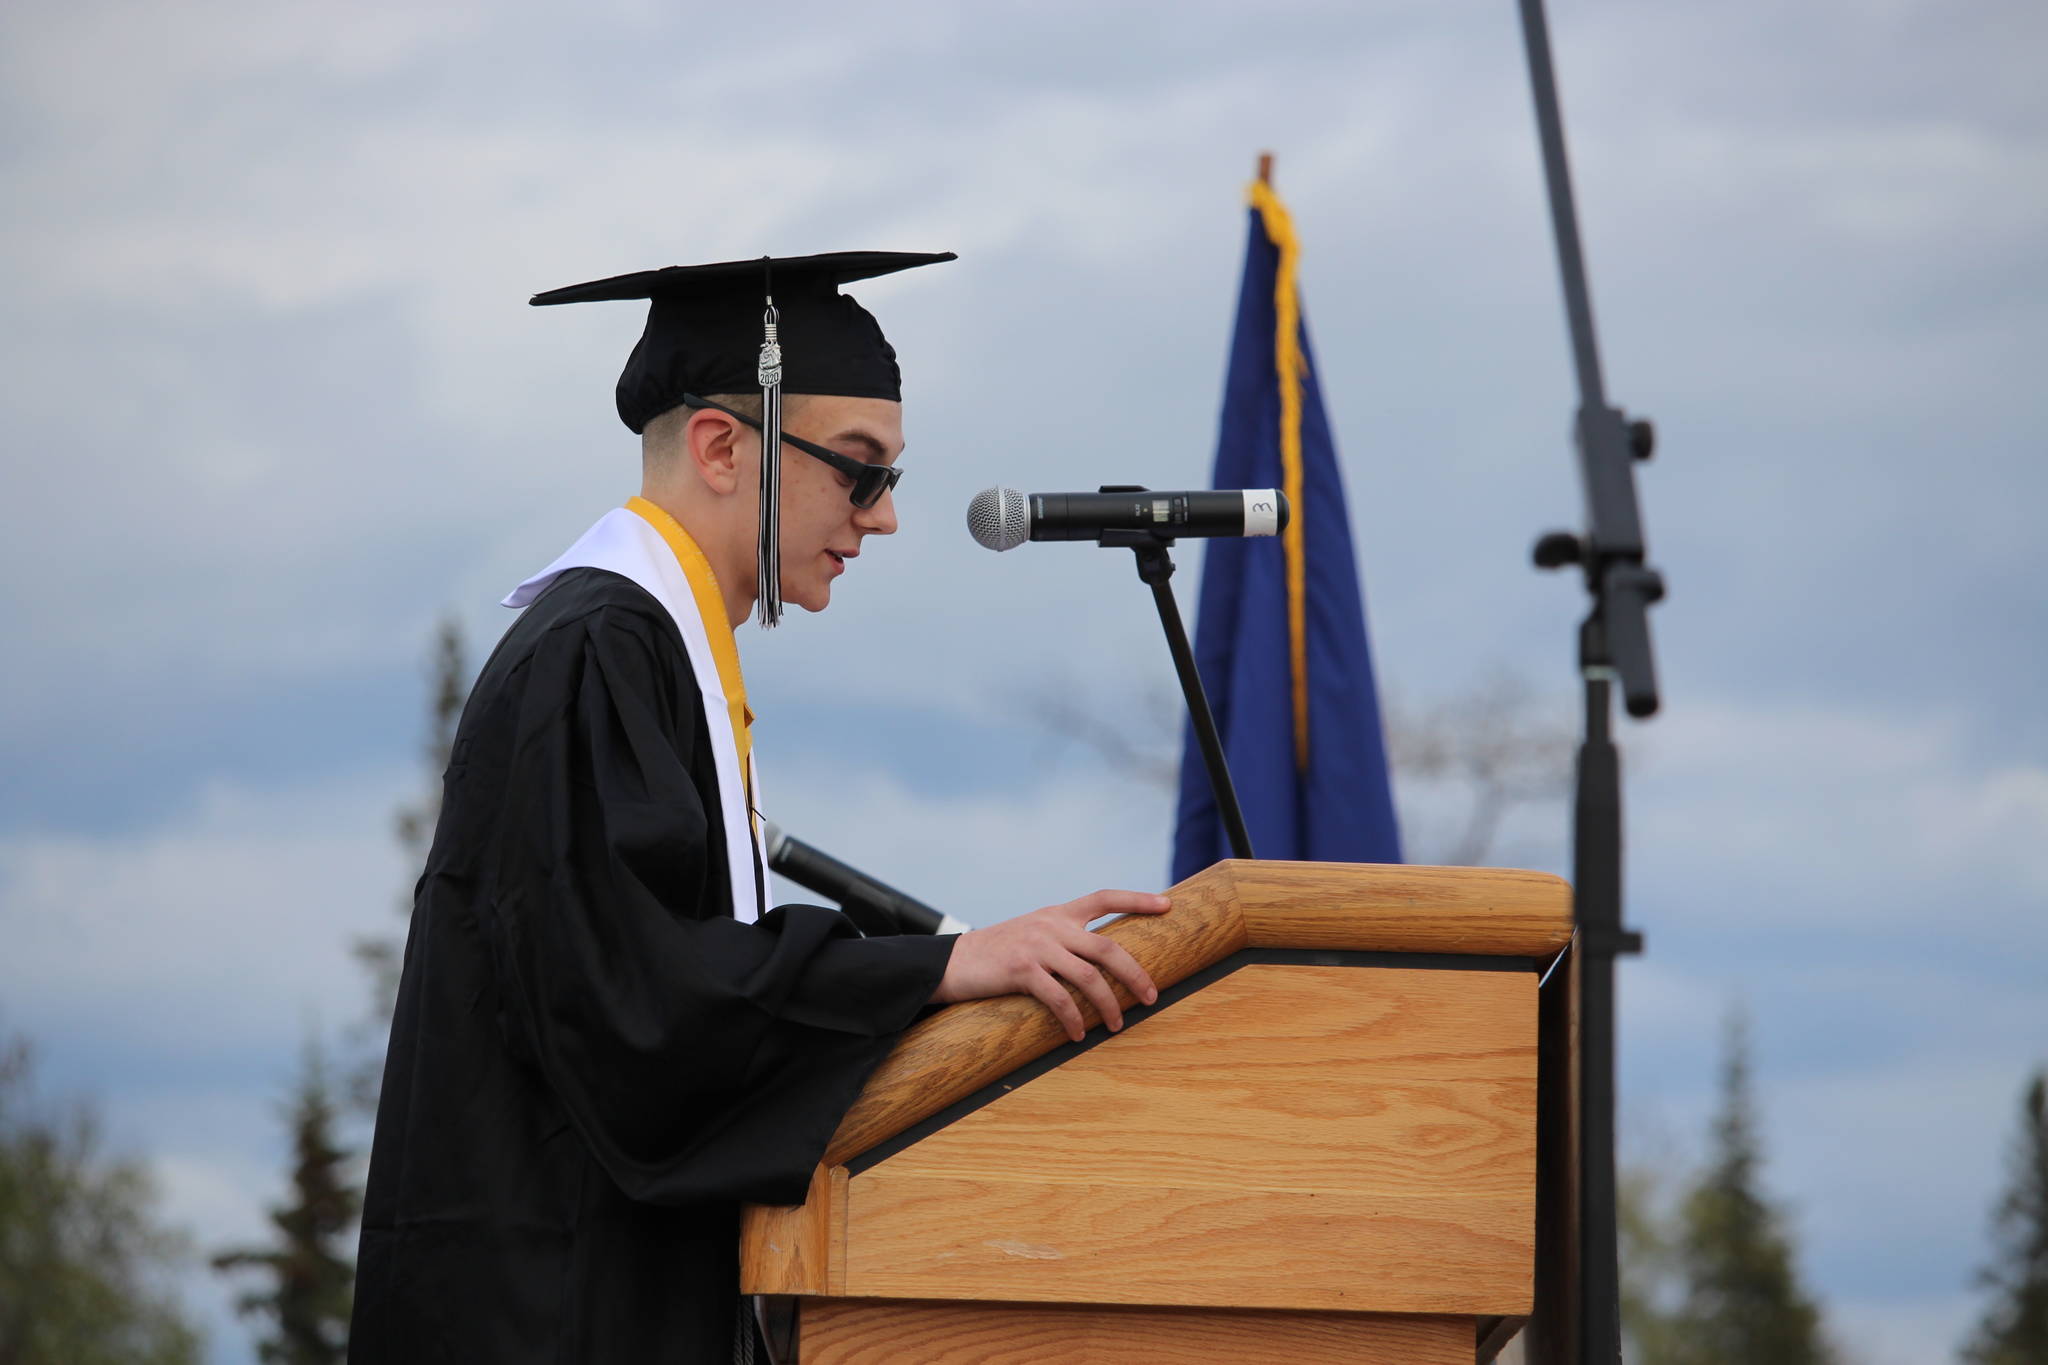 Class valedictorian Joseph Yourkoski gives a speech during the 2020 Nikiski High School Graduation Commencement Ceremony in Nikiski, Alaska on May 19, 2020. (Photo by Brian Mazurek/Peninsula Clarion)